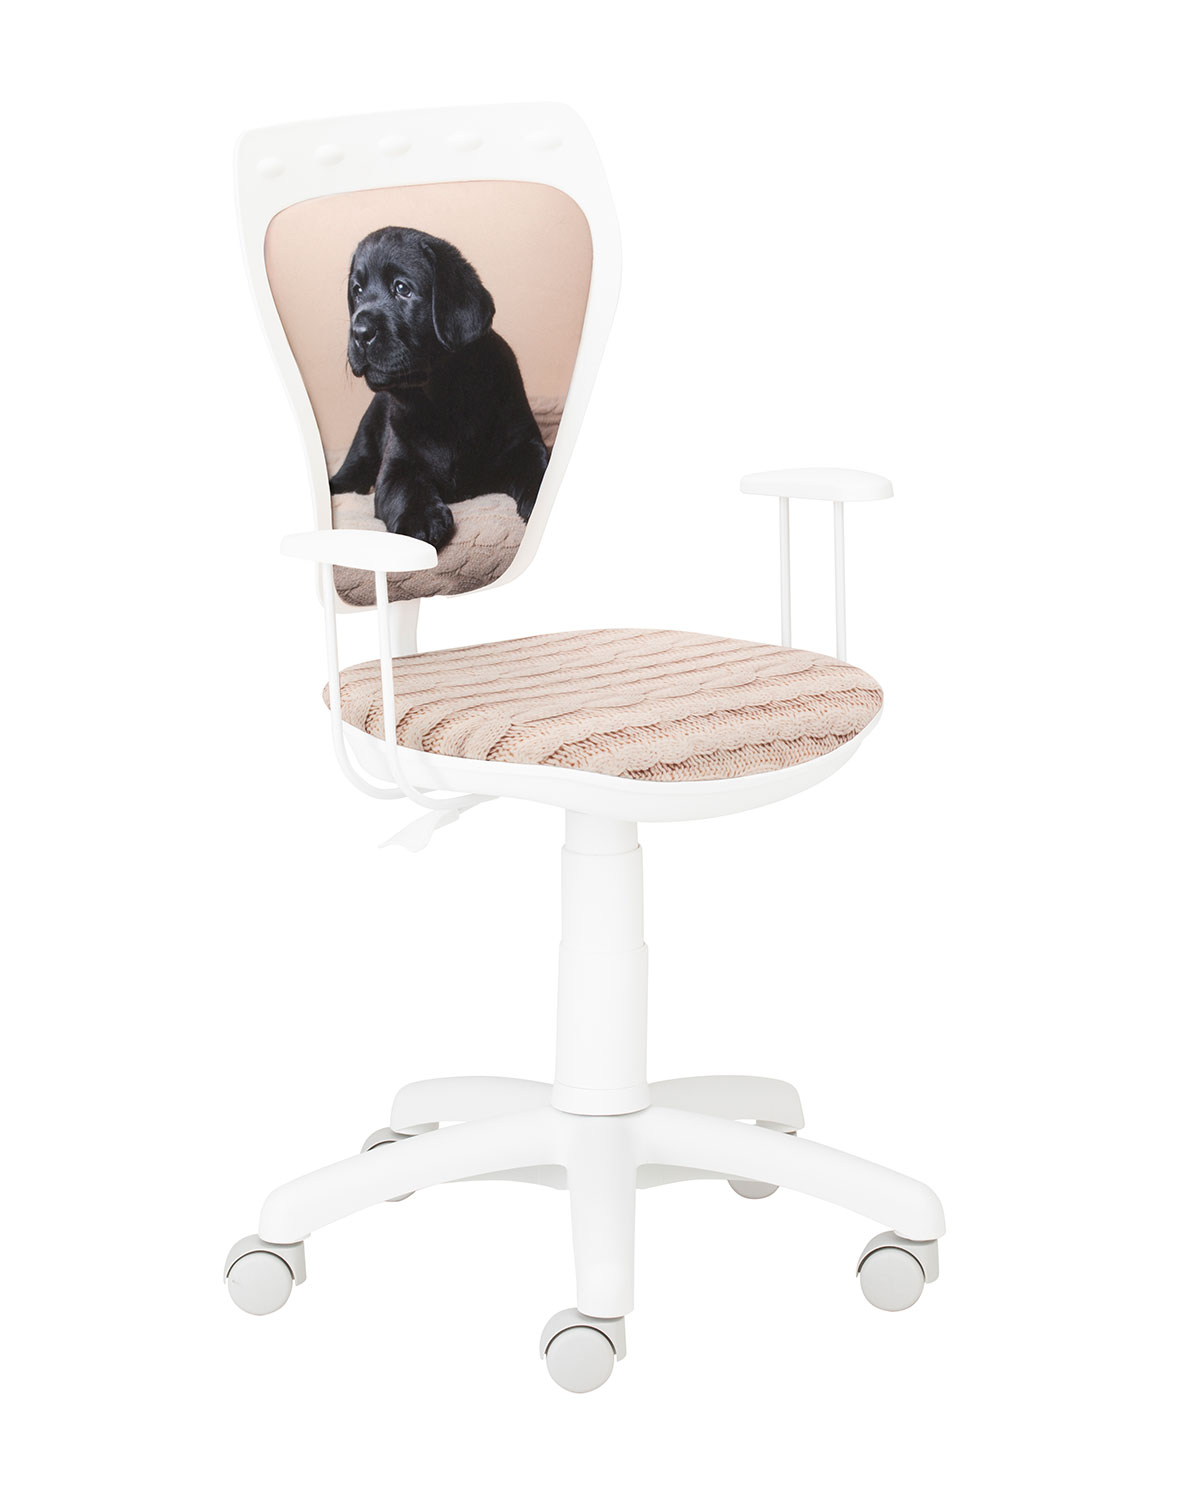 Židle Ministyle bílá Labrador